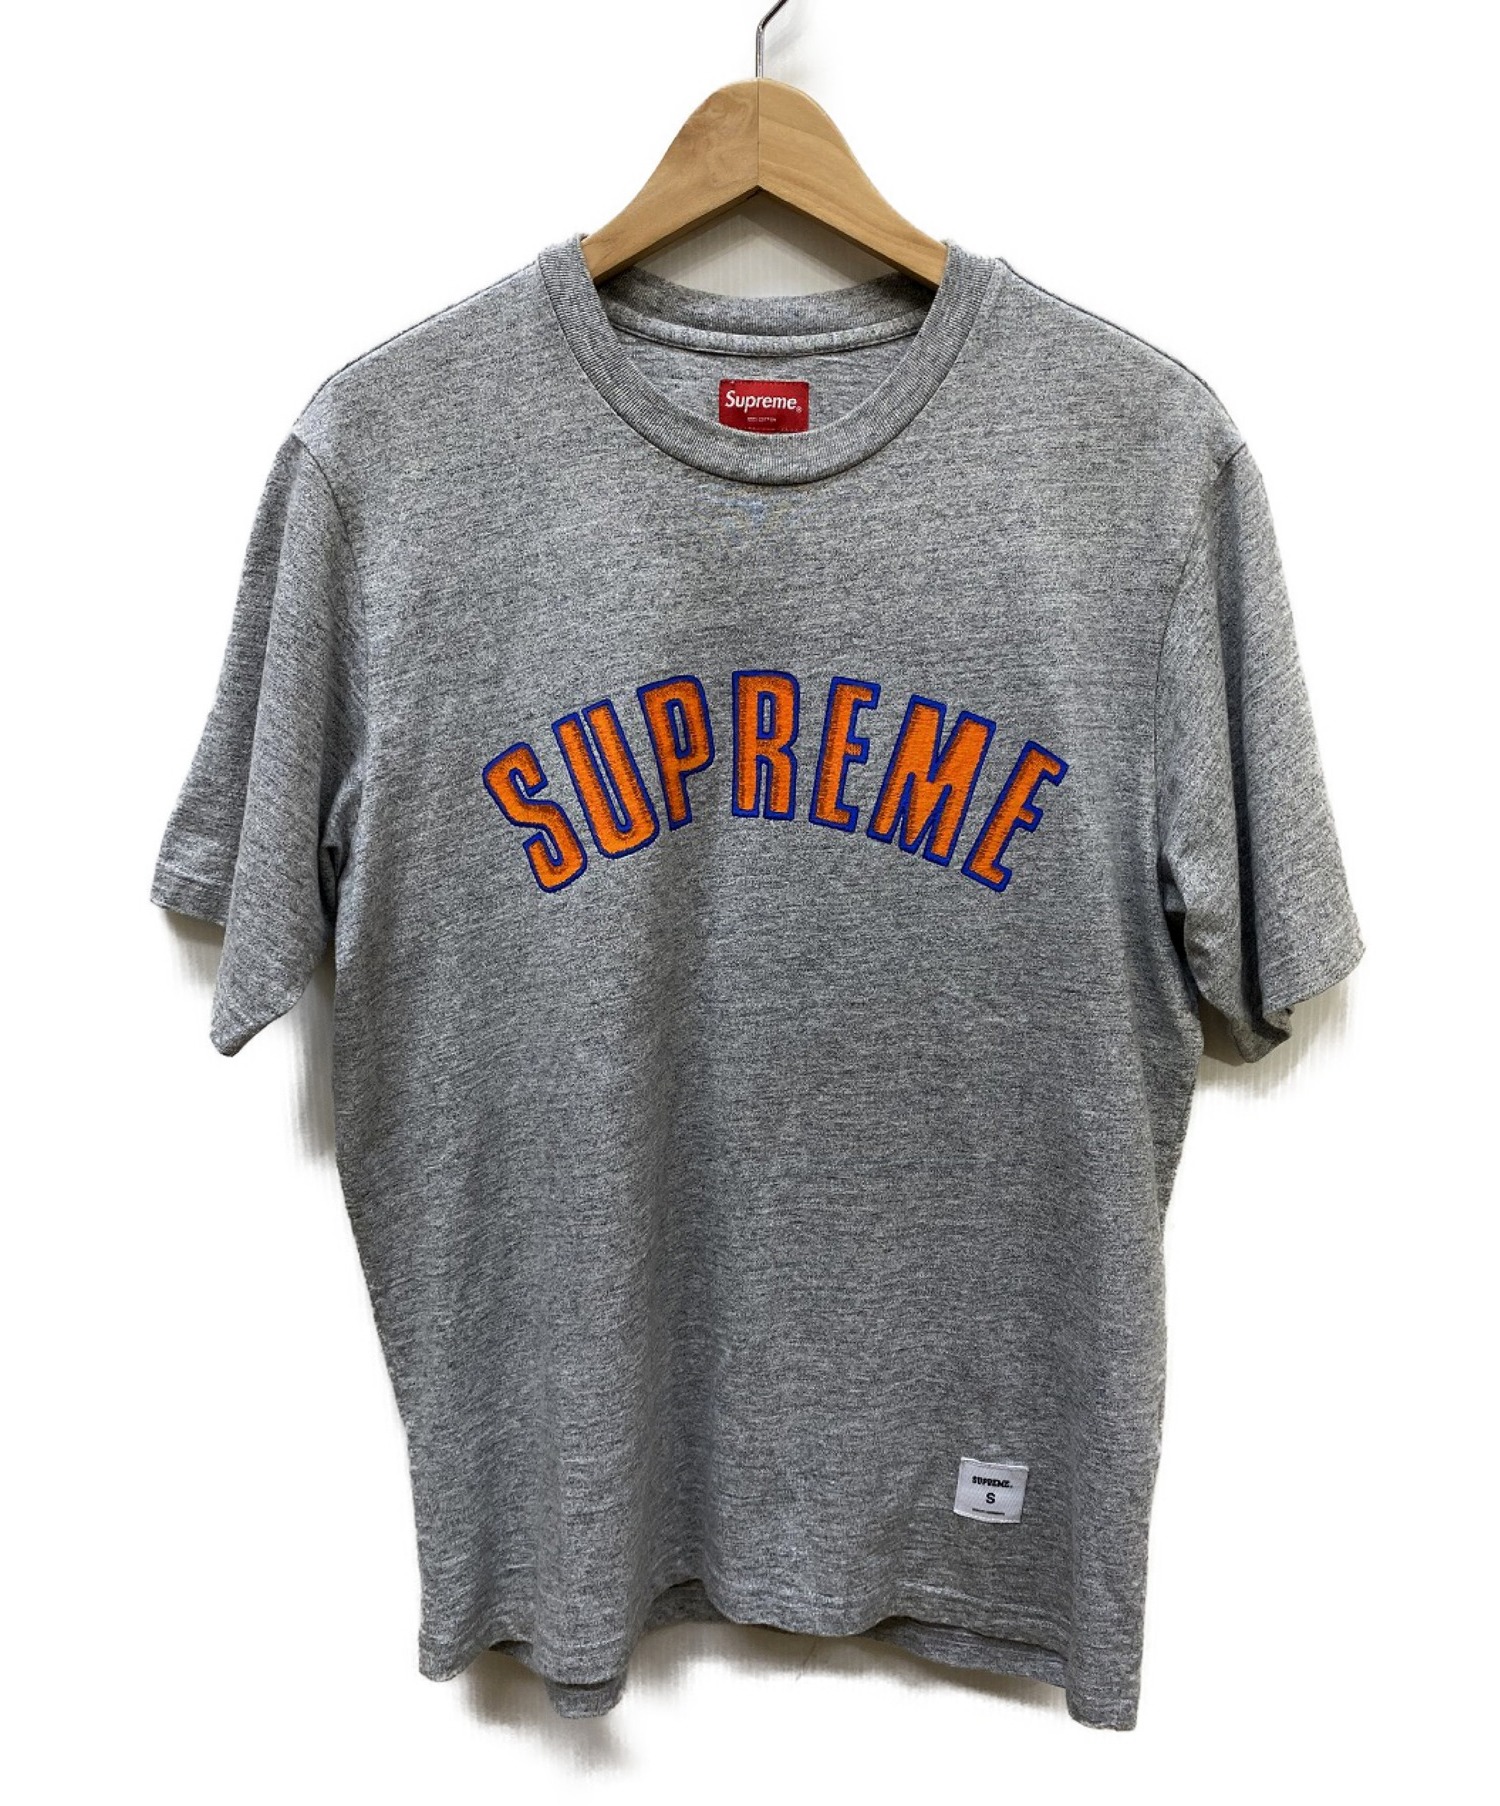 supreme printed t shirt